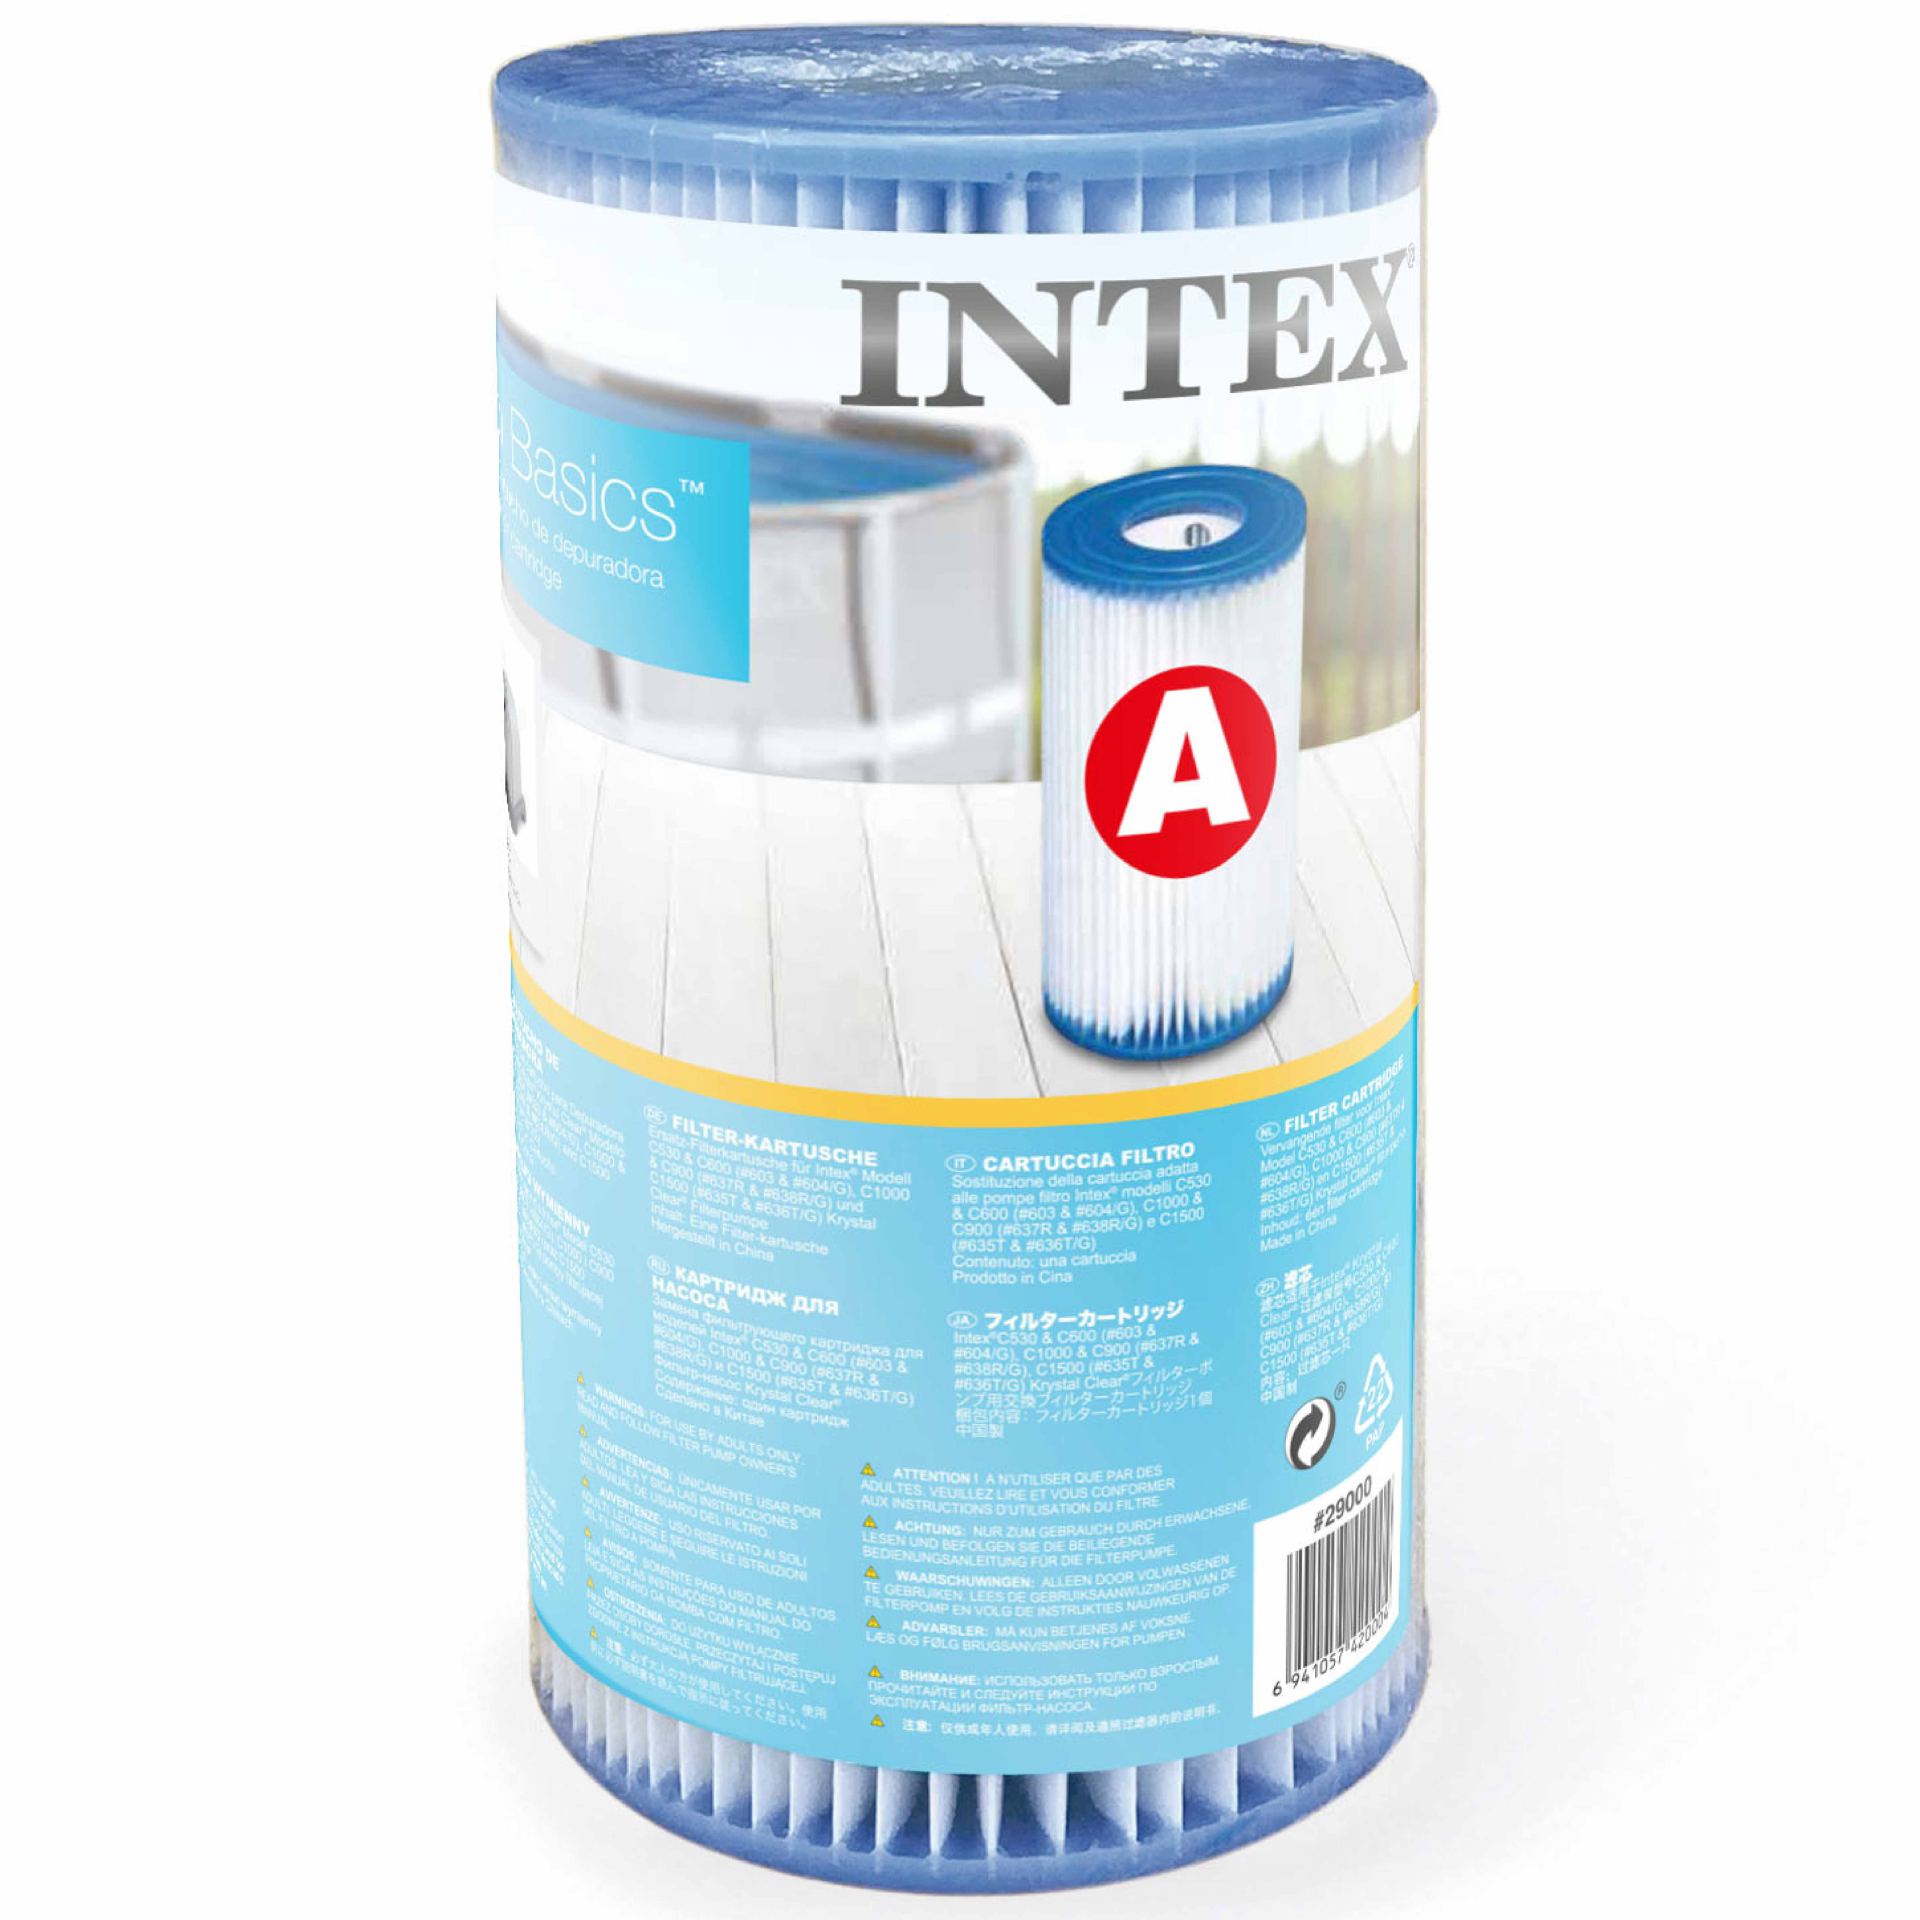 Intex filter cartridge A